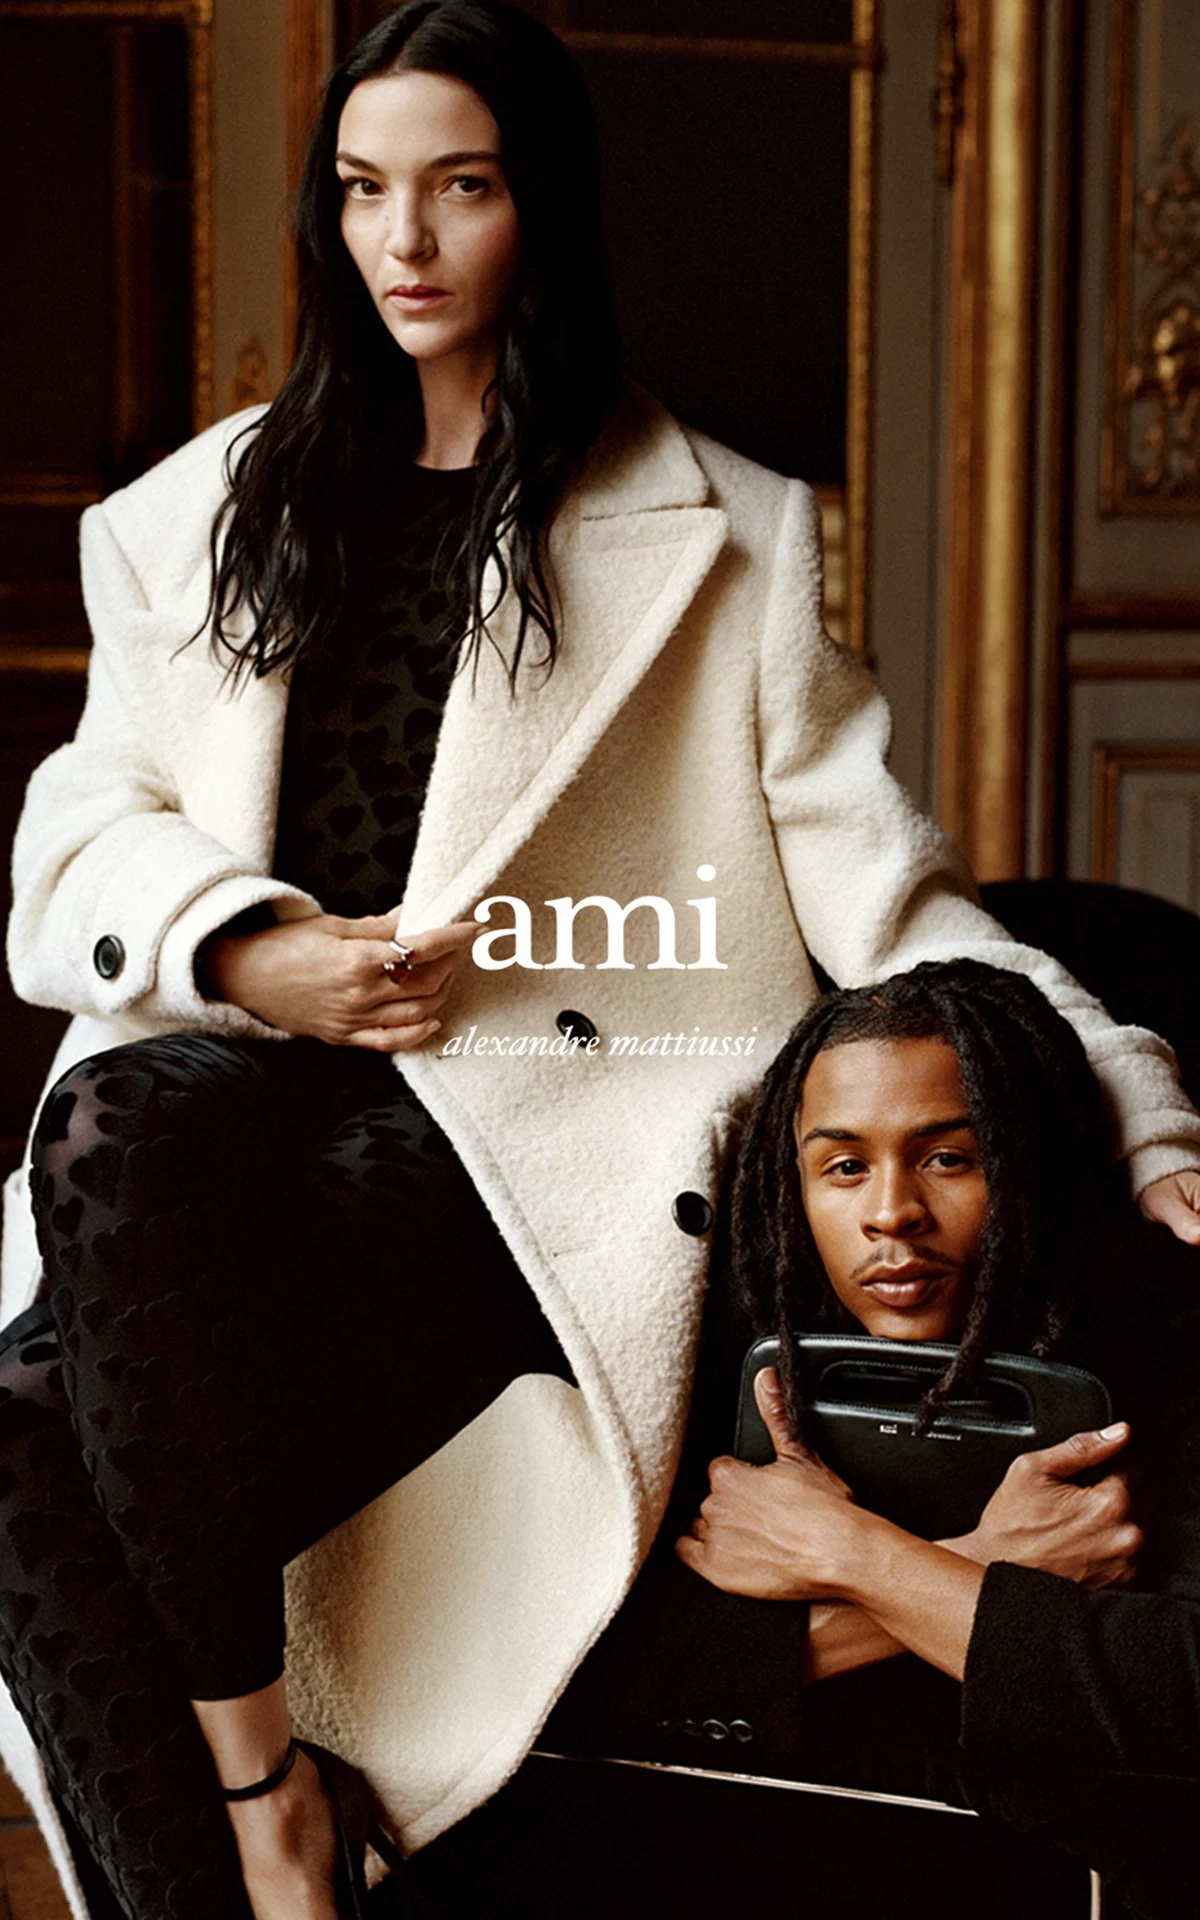 New brand: AMI